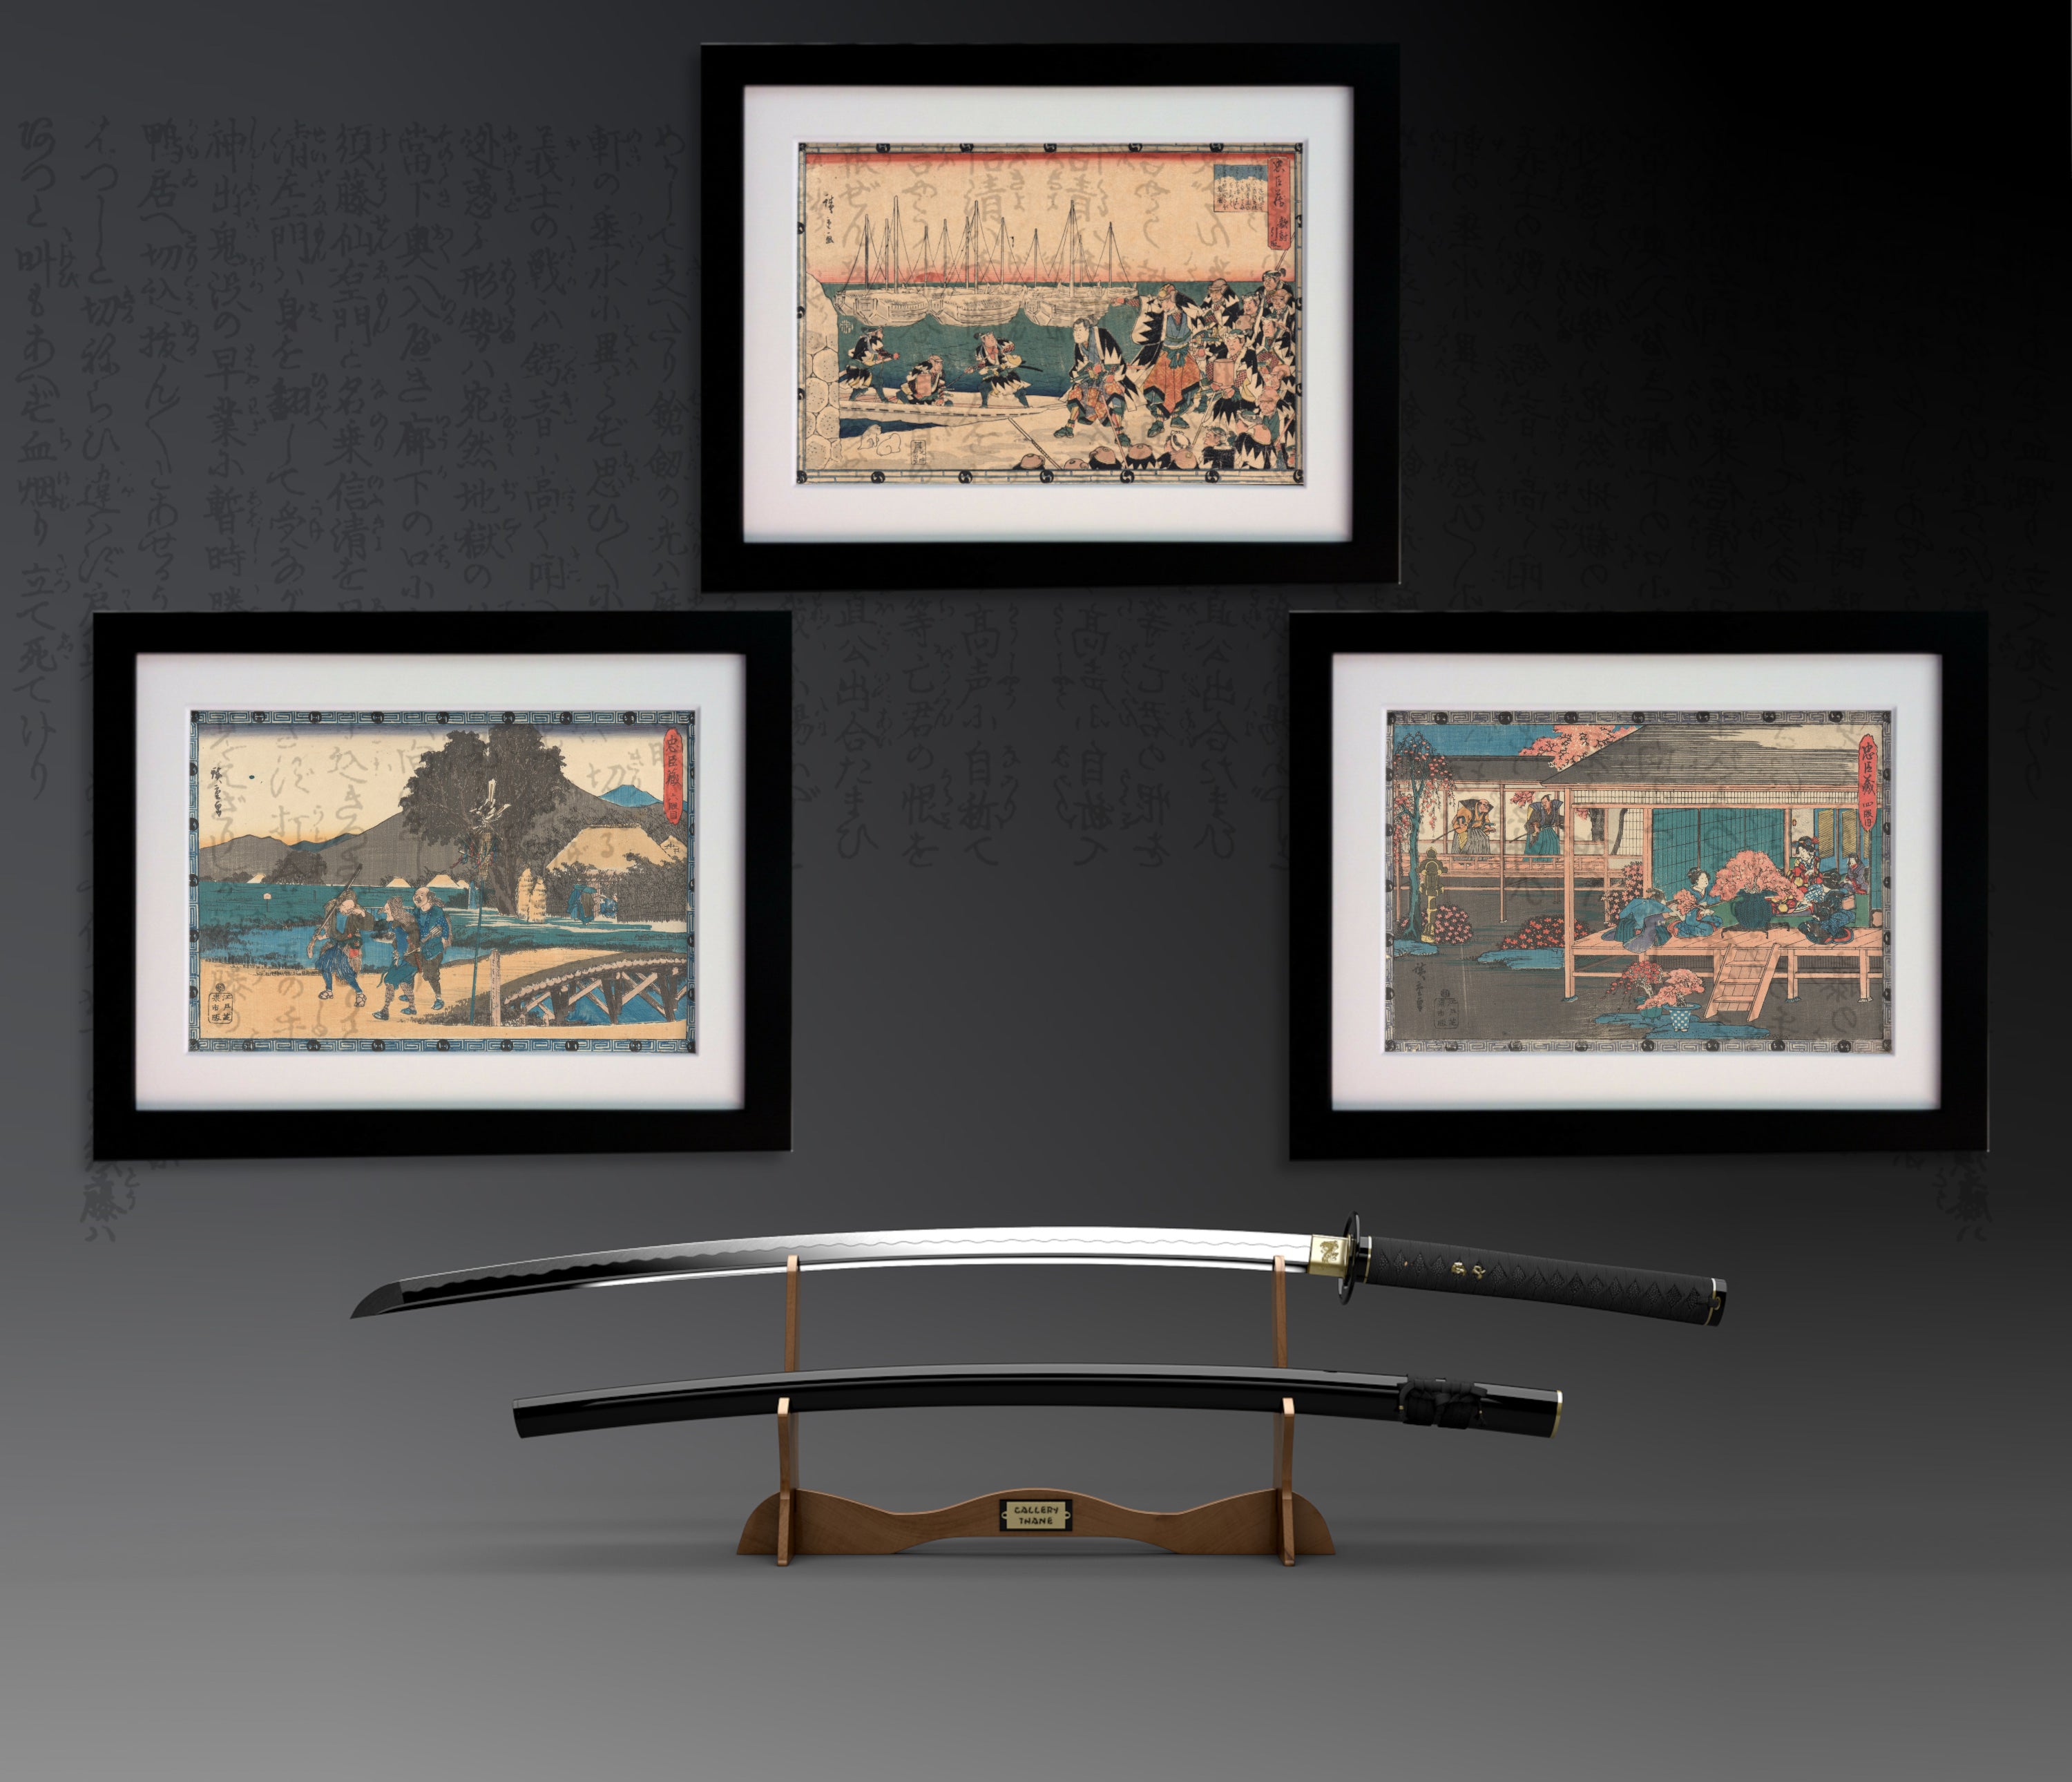 Ando Hiroshige, The Ronin Series, set of 3 Japanese Warrior Prints